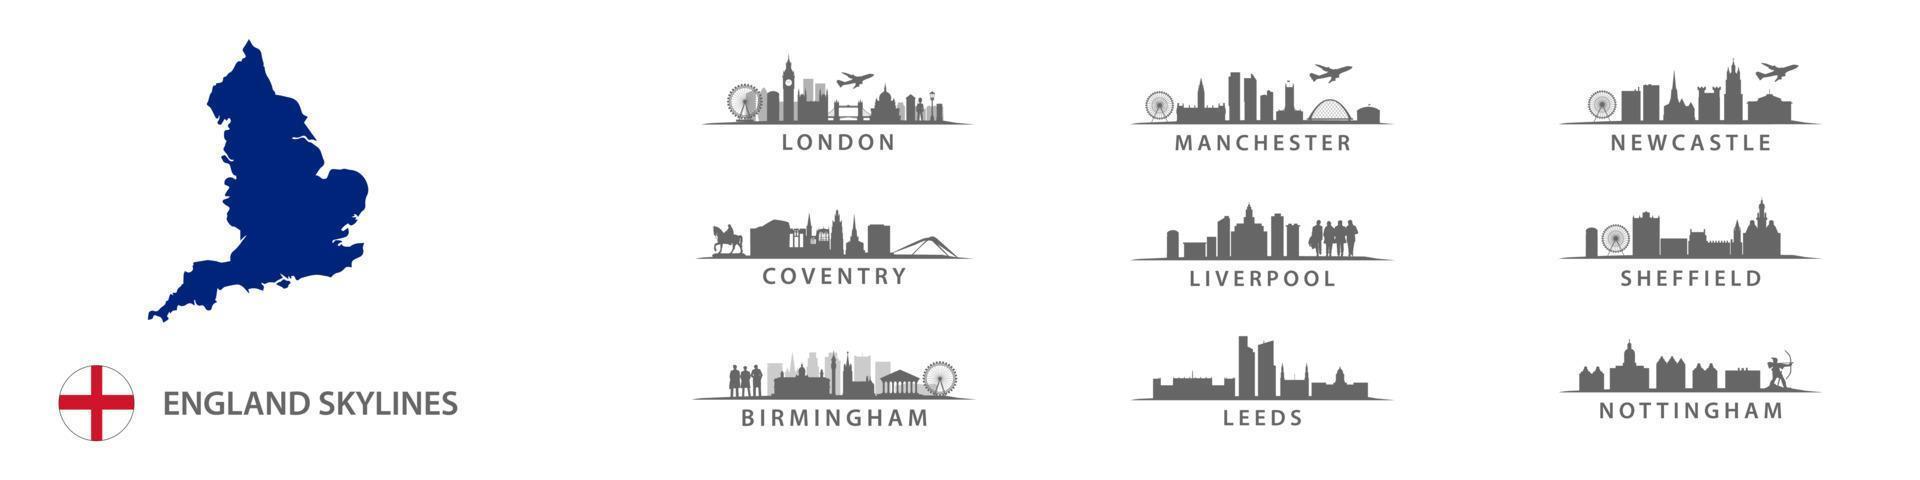 stor städer i England, horisonter i vektor sihuetter, engelsk destinationer tycka om london, leeds, Coventry, birmingham, liverpool, , manchesternewcastle, sheffield, Nottingham